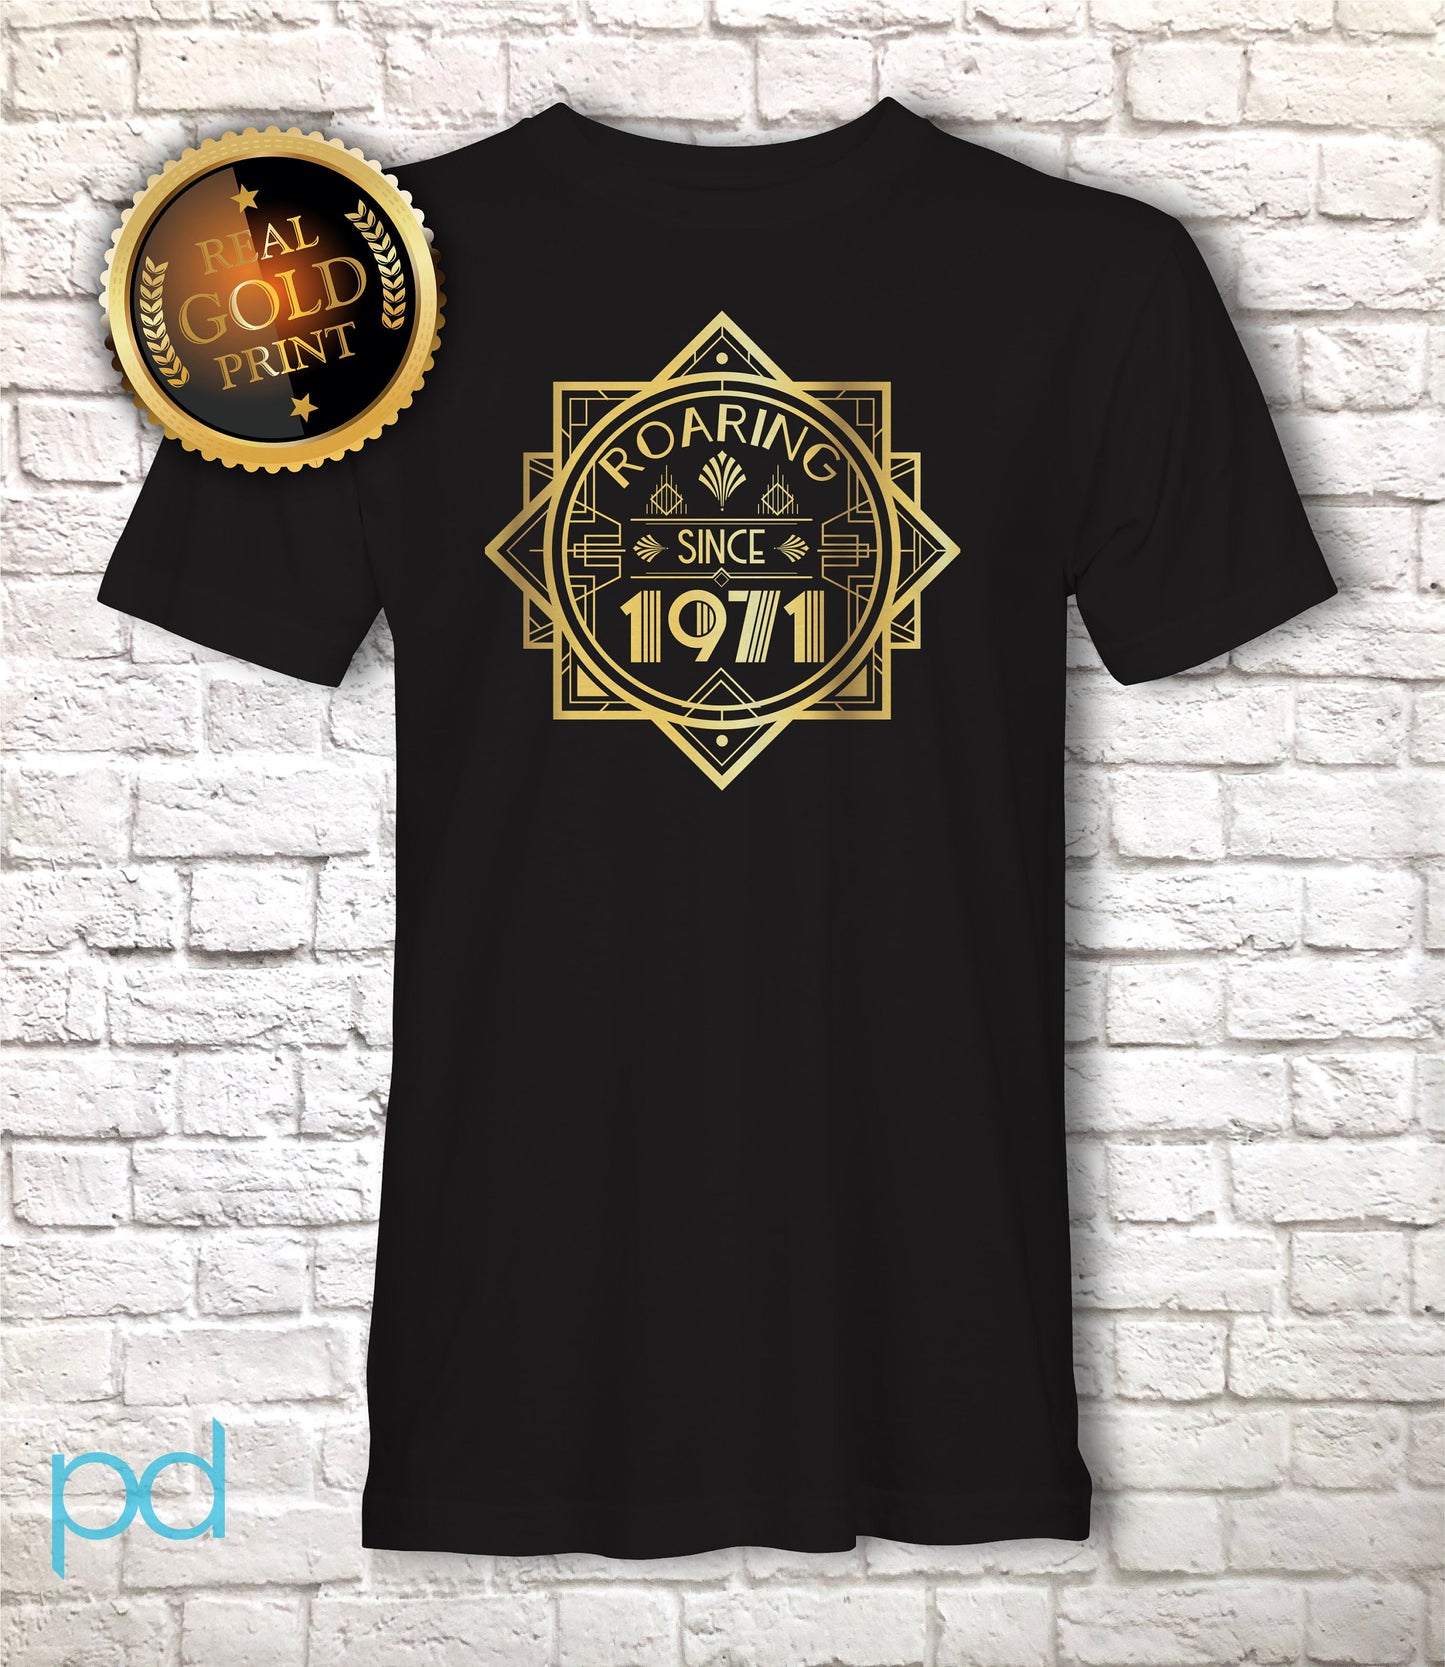 Roaring 1971 T Shirt Gold Foil Print, 51st Birthday Gift T-Shirt in Golden Art Deco 1920s Style, Fiftieth Unisex Tee Shirt Top